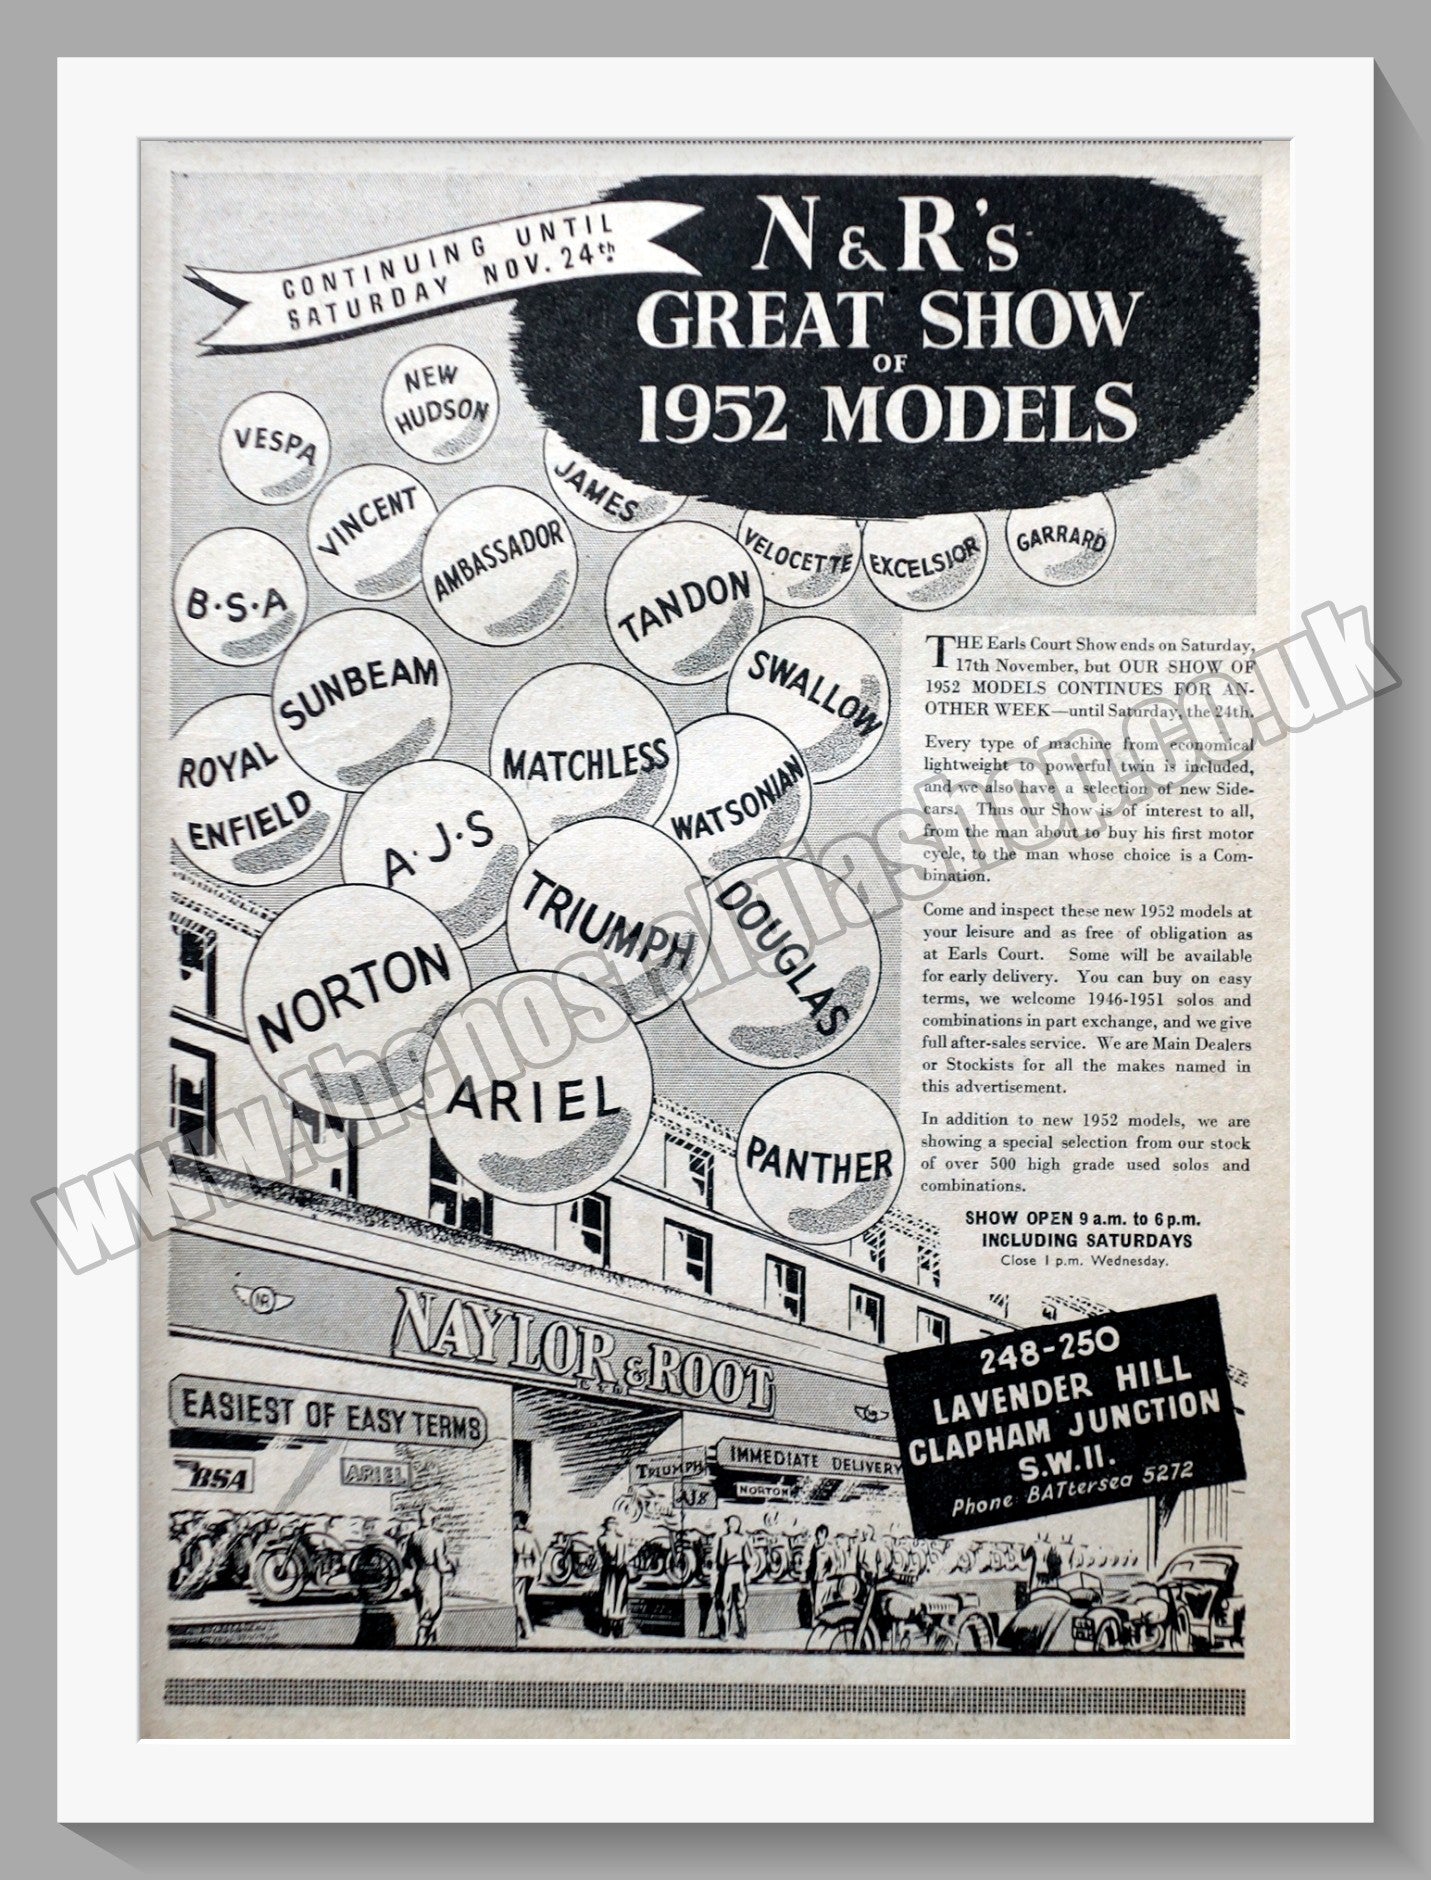 Naylor & Root Ltd Motorcycle Dealer. Original Advert 1951 (ref AD57524)